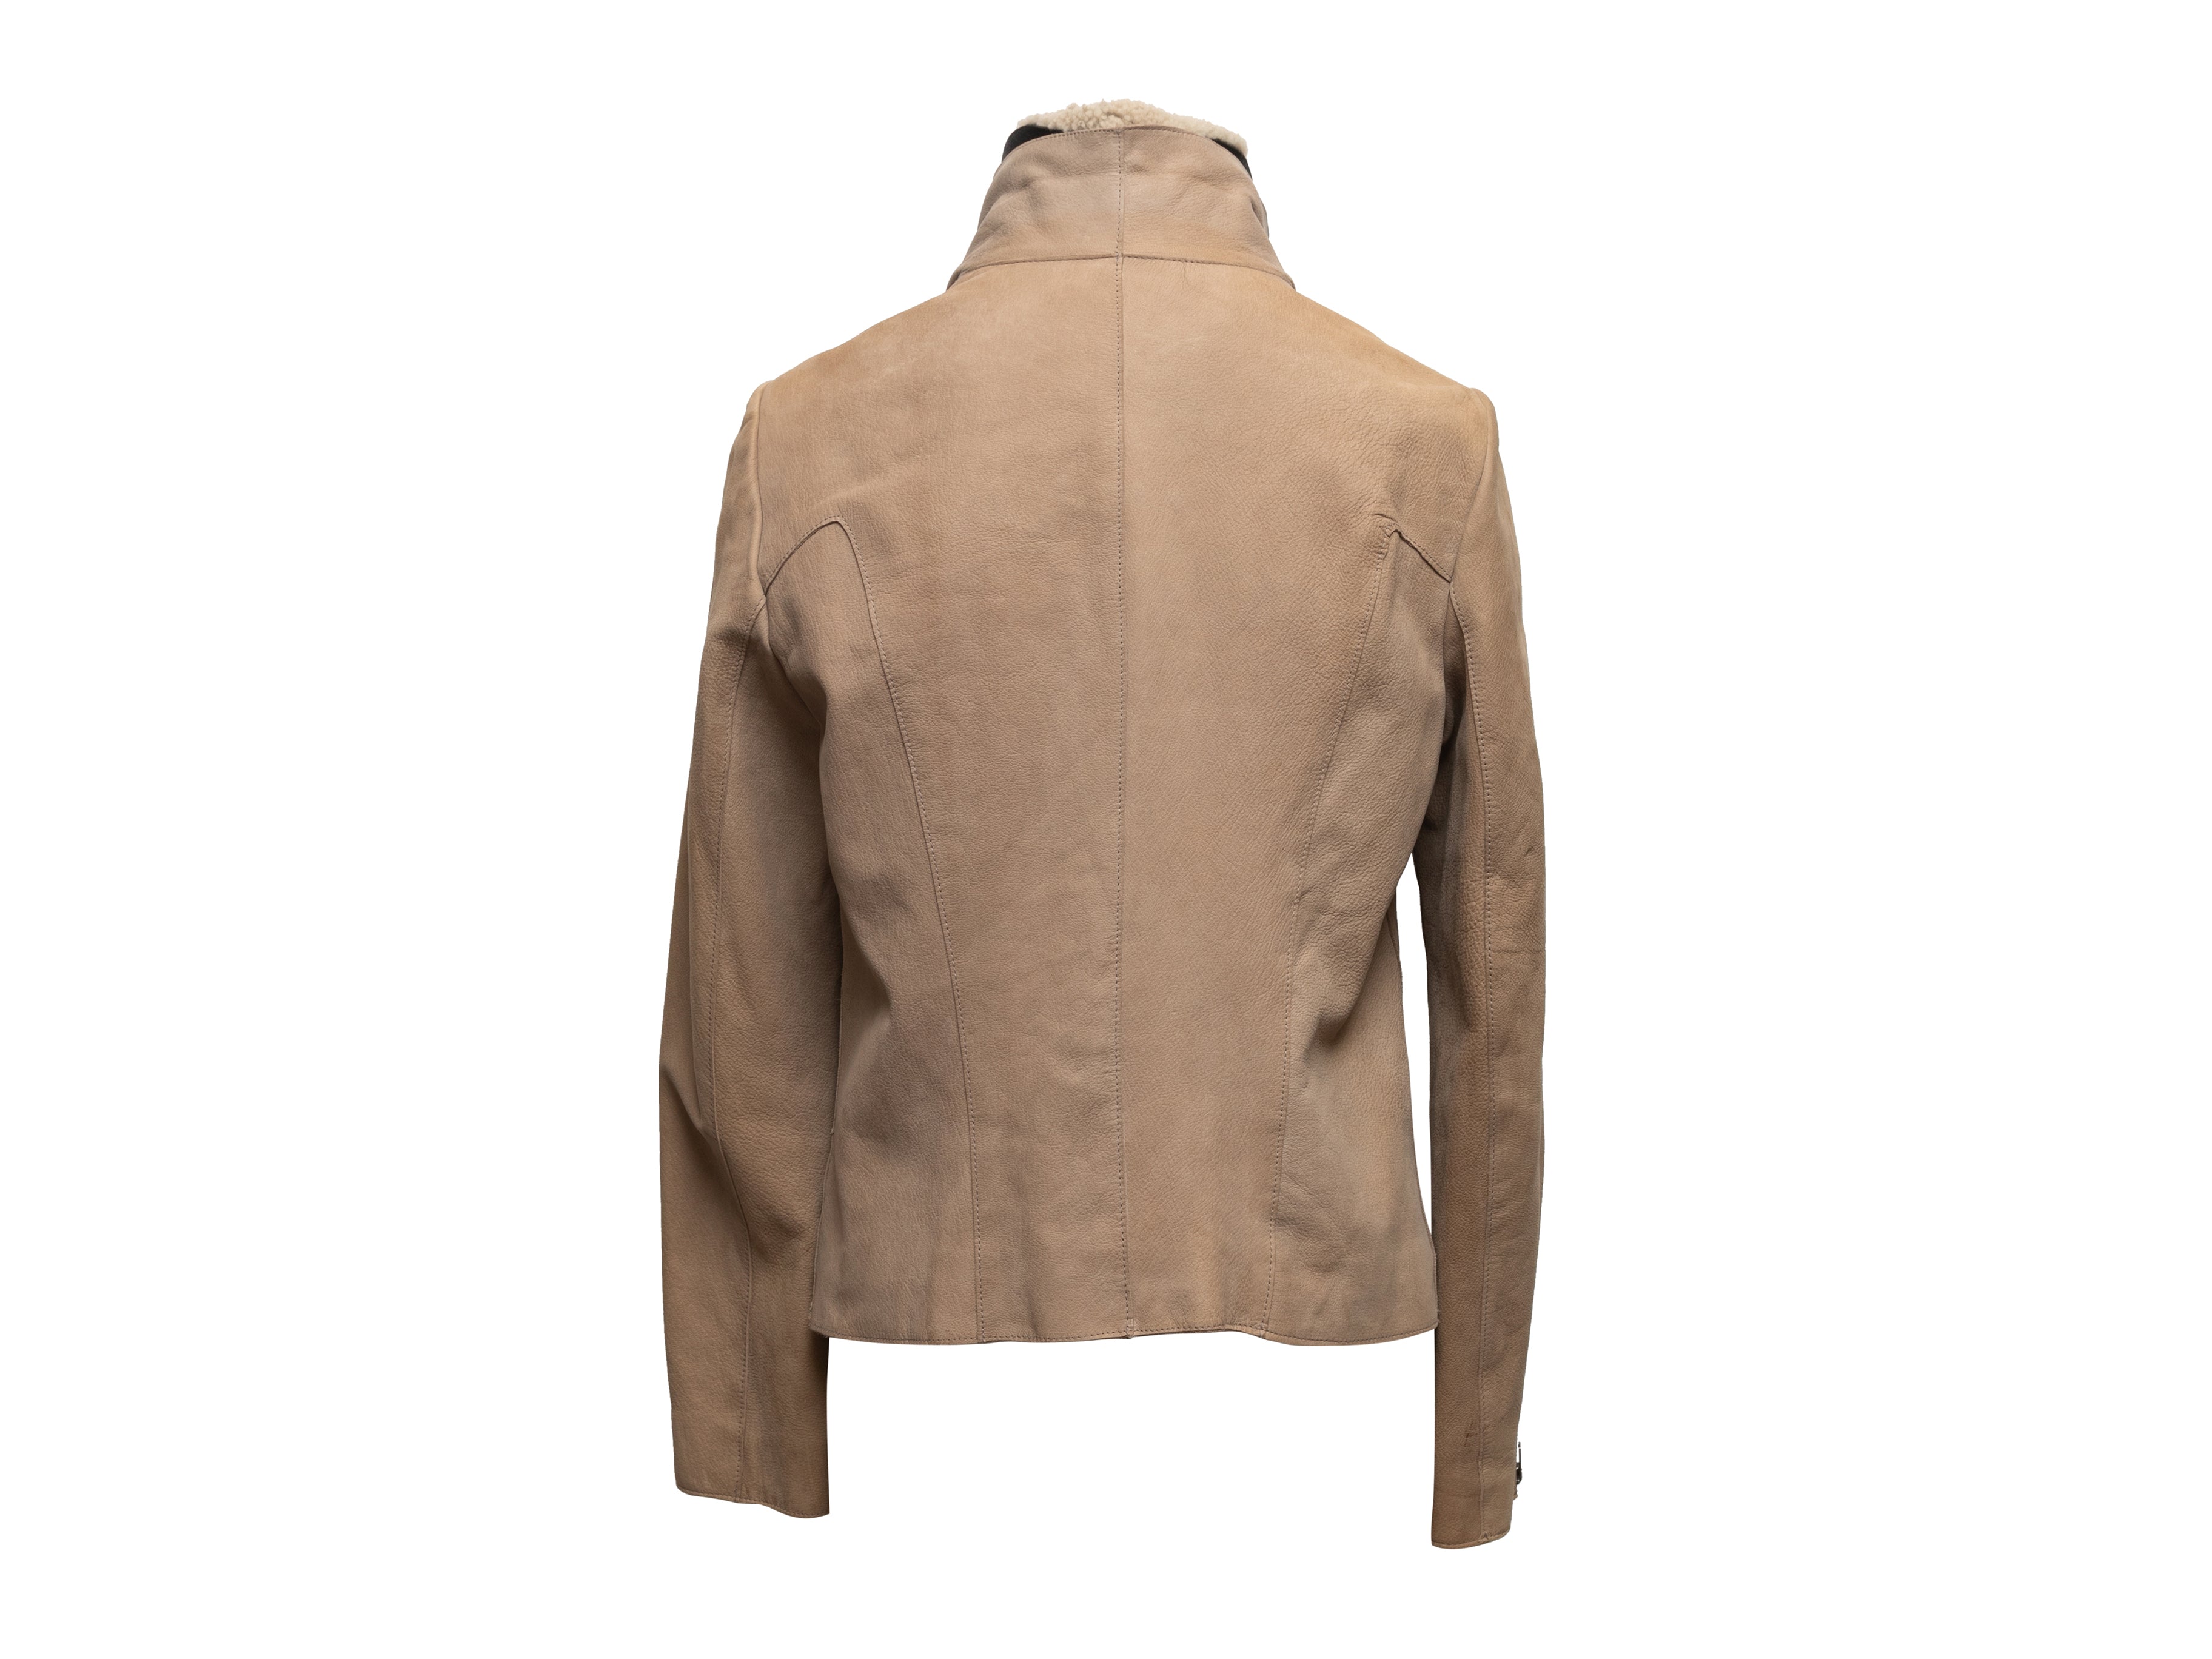 Tan Leather & Moto Jacket Size US L